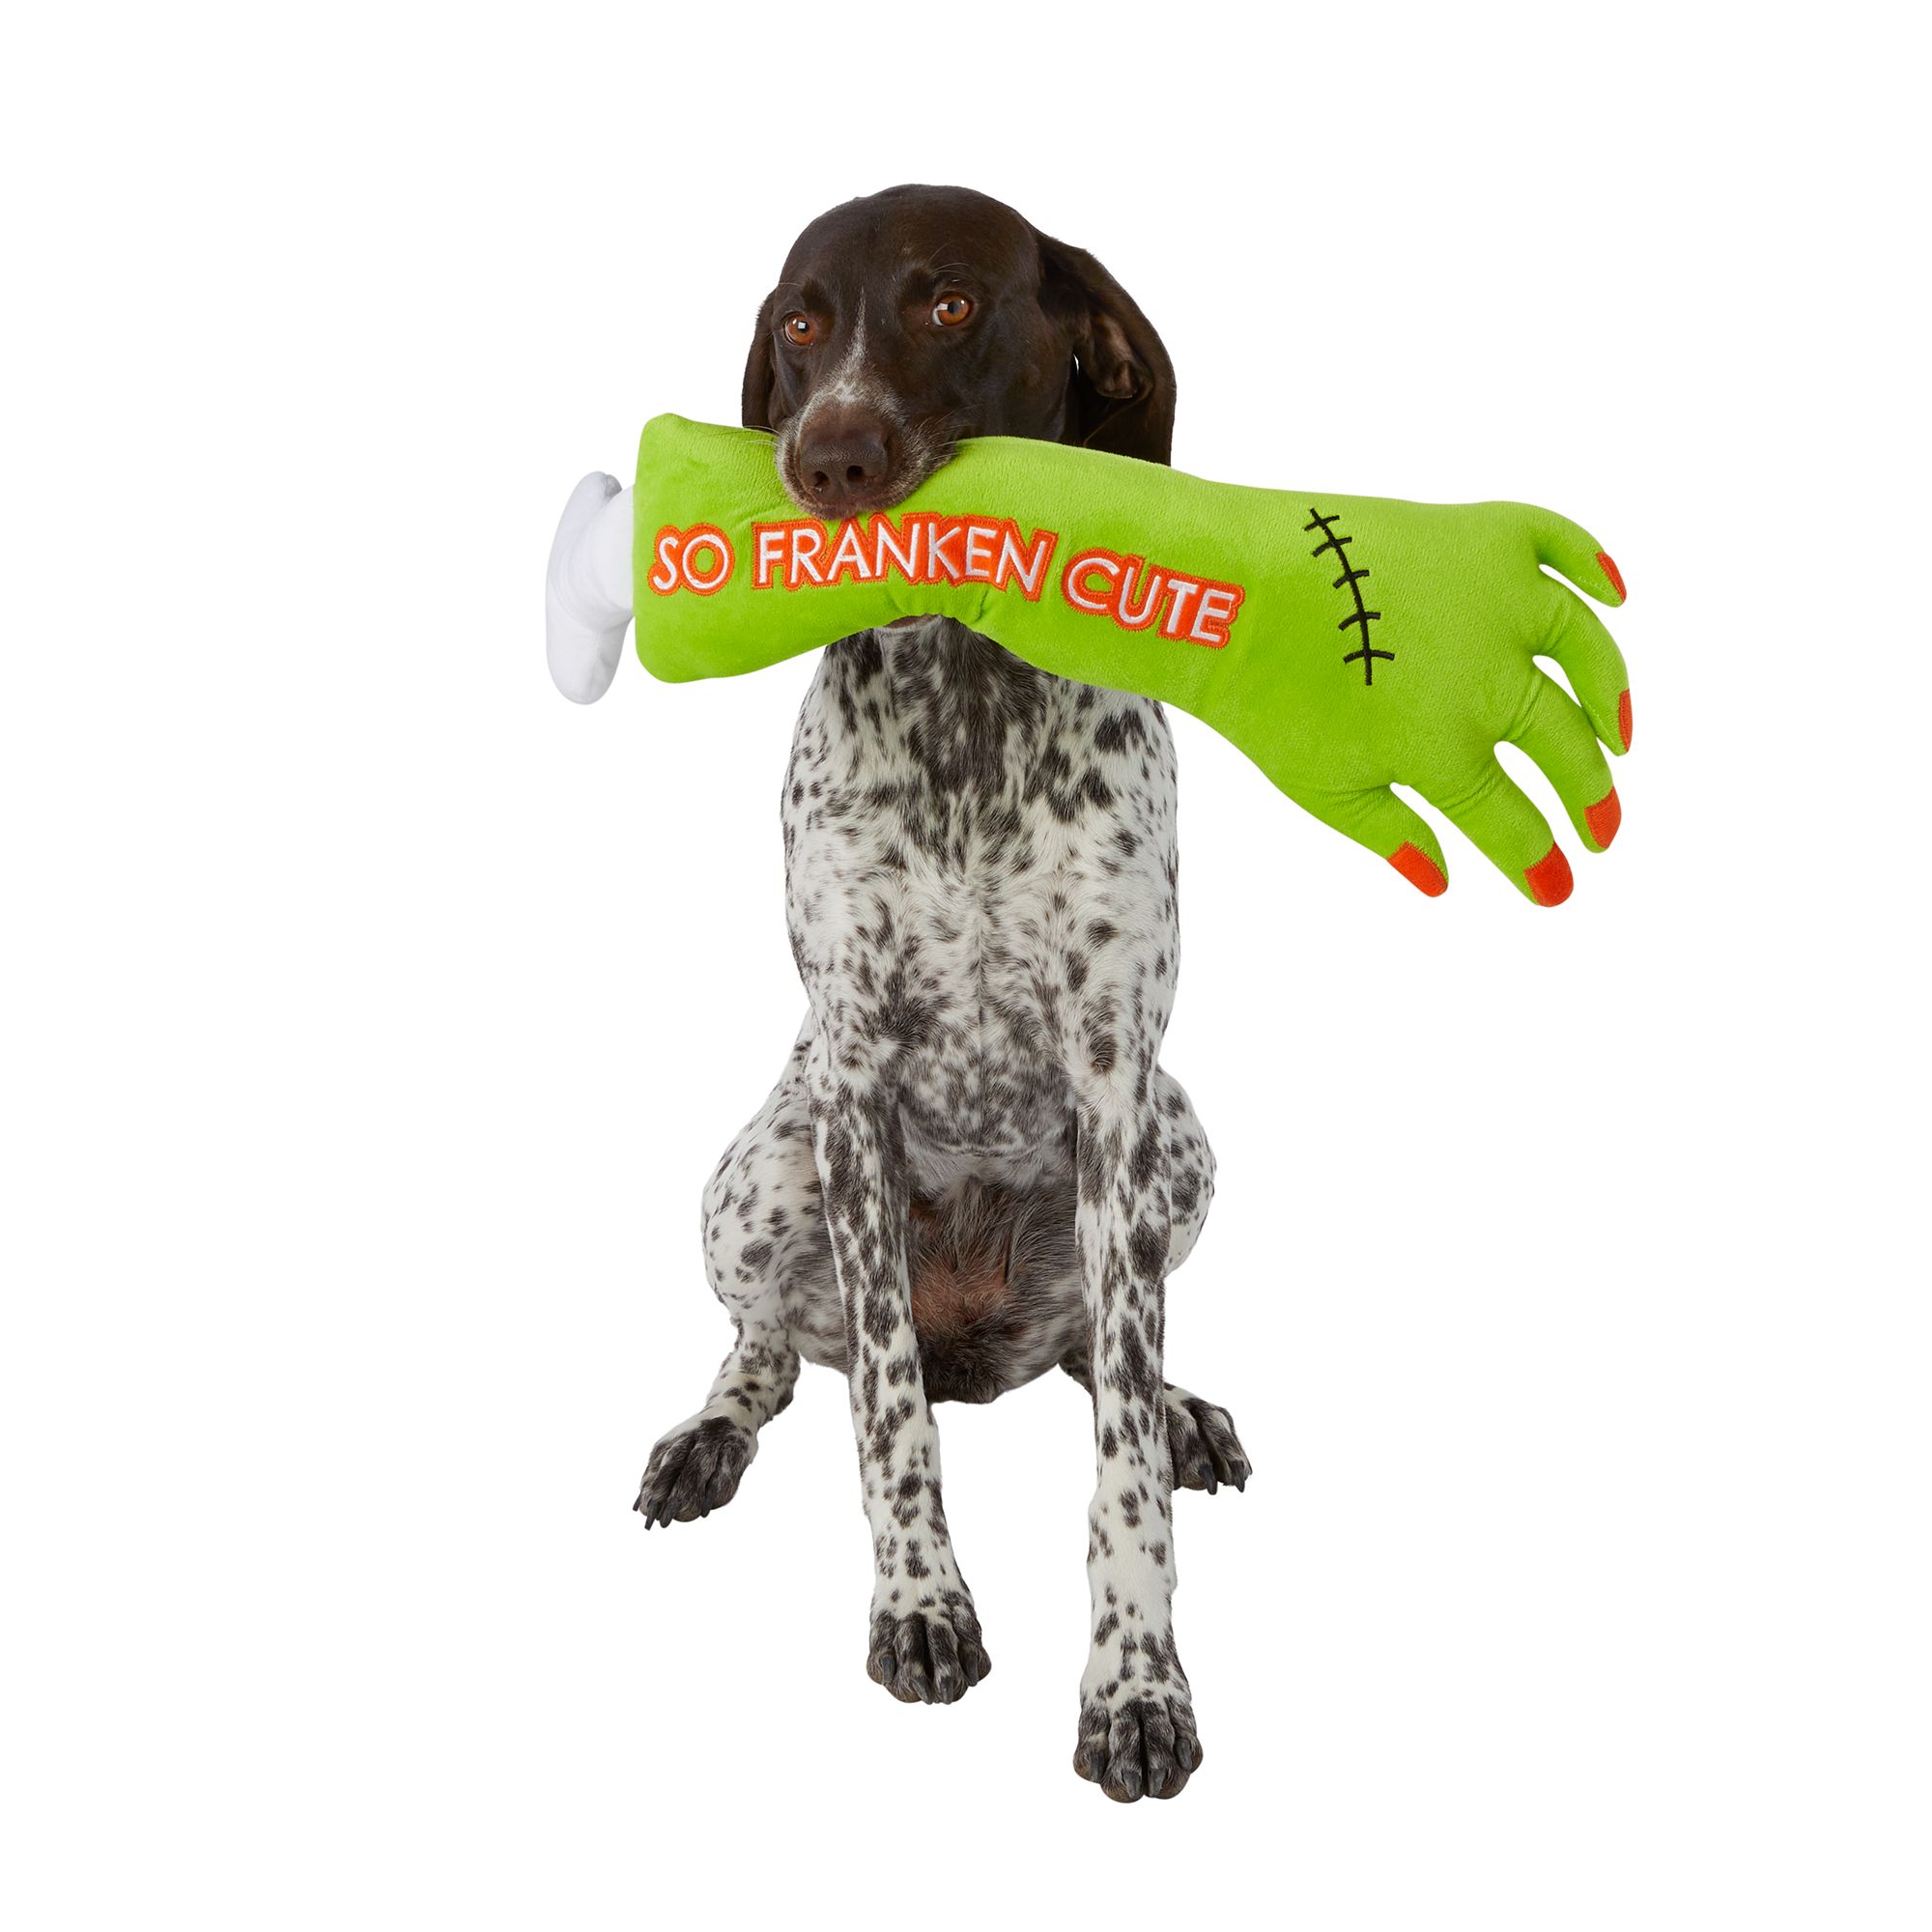 Dog & Puppy Toys: Indestructible Chew Toys, PetSmart